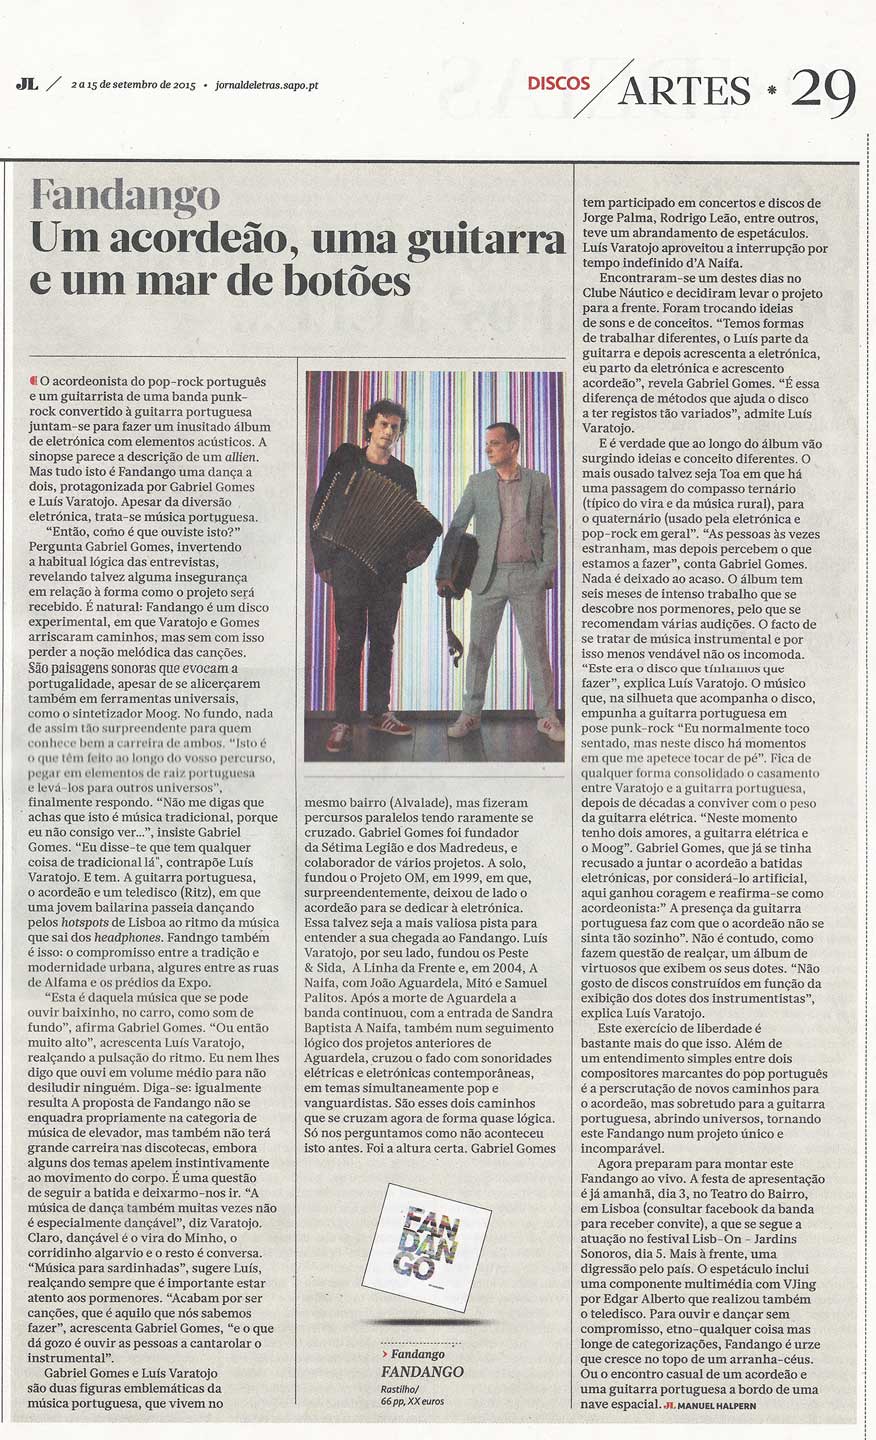 Fandango na imprensa - Jornal de Letras - 02.09.2015